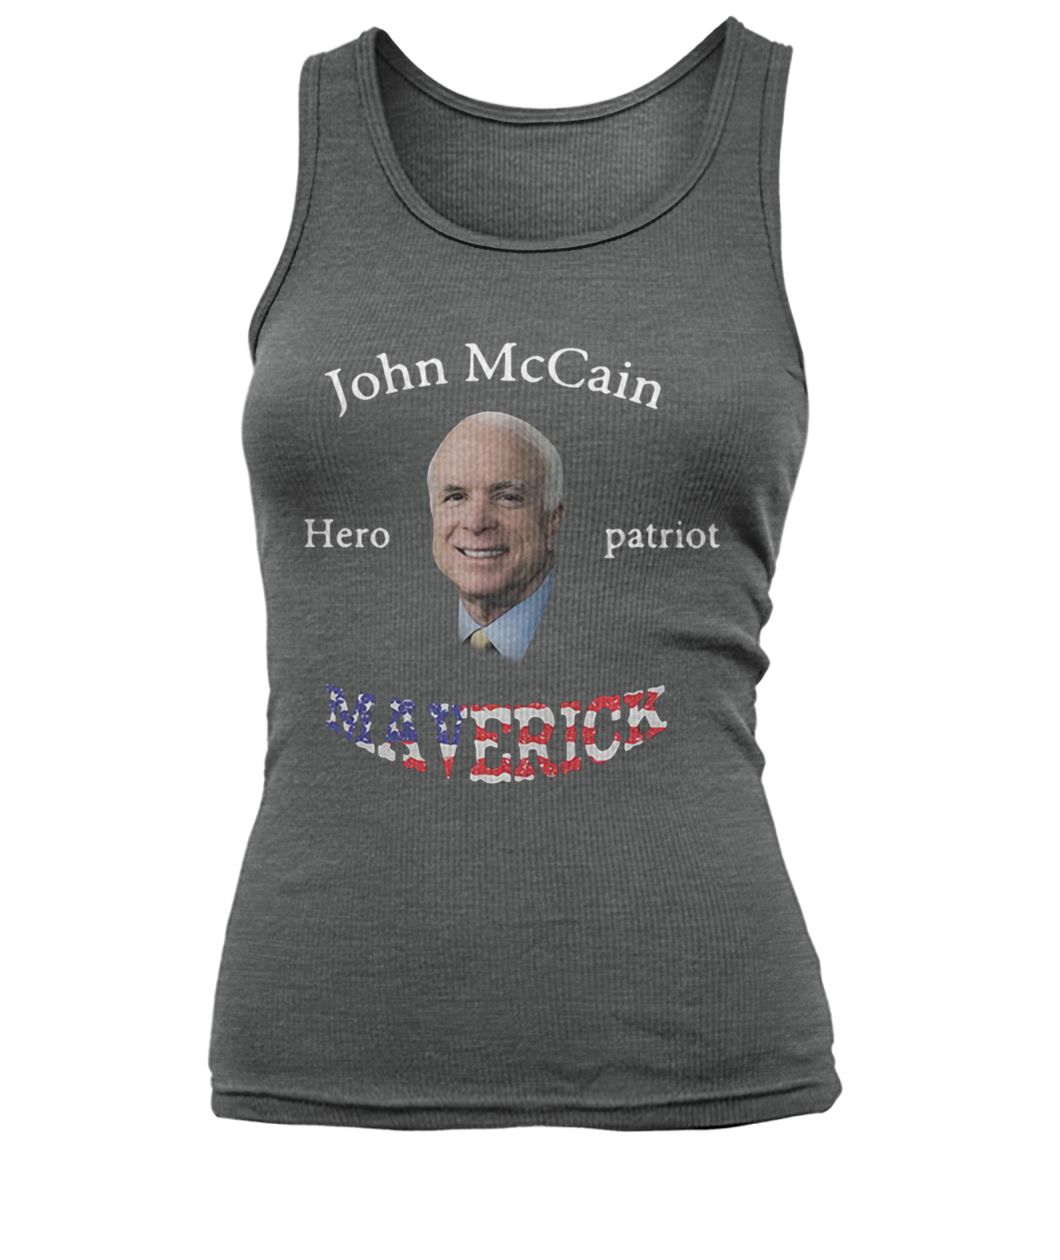 John McCain hero patriot maverick american flag women's tank top